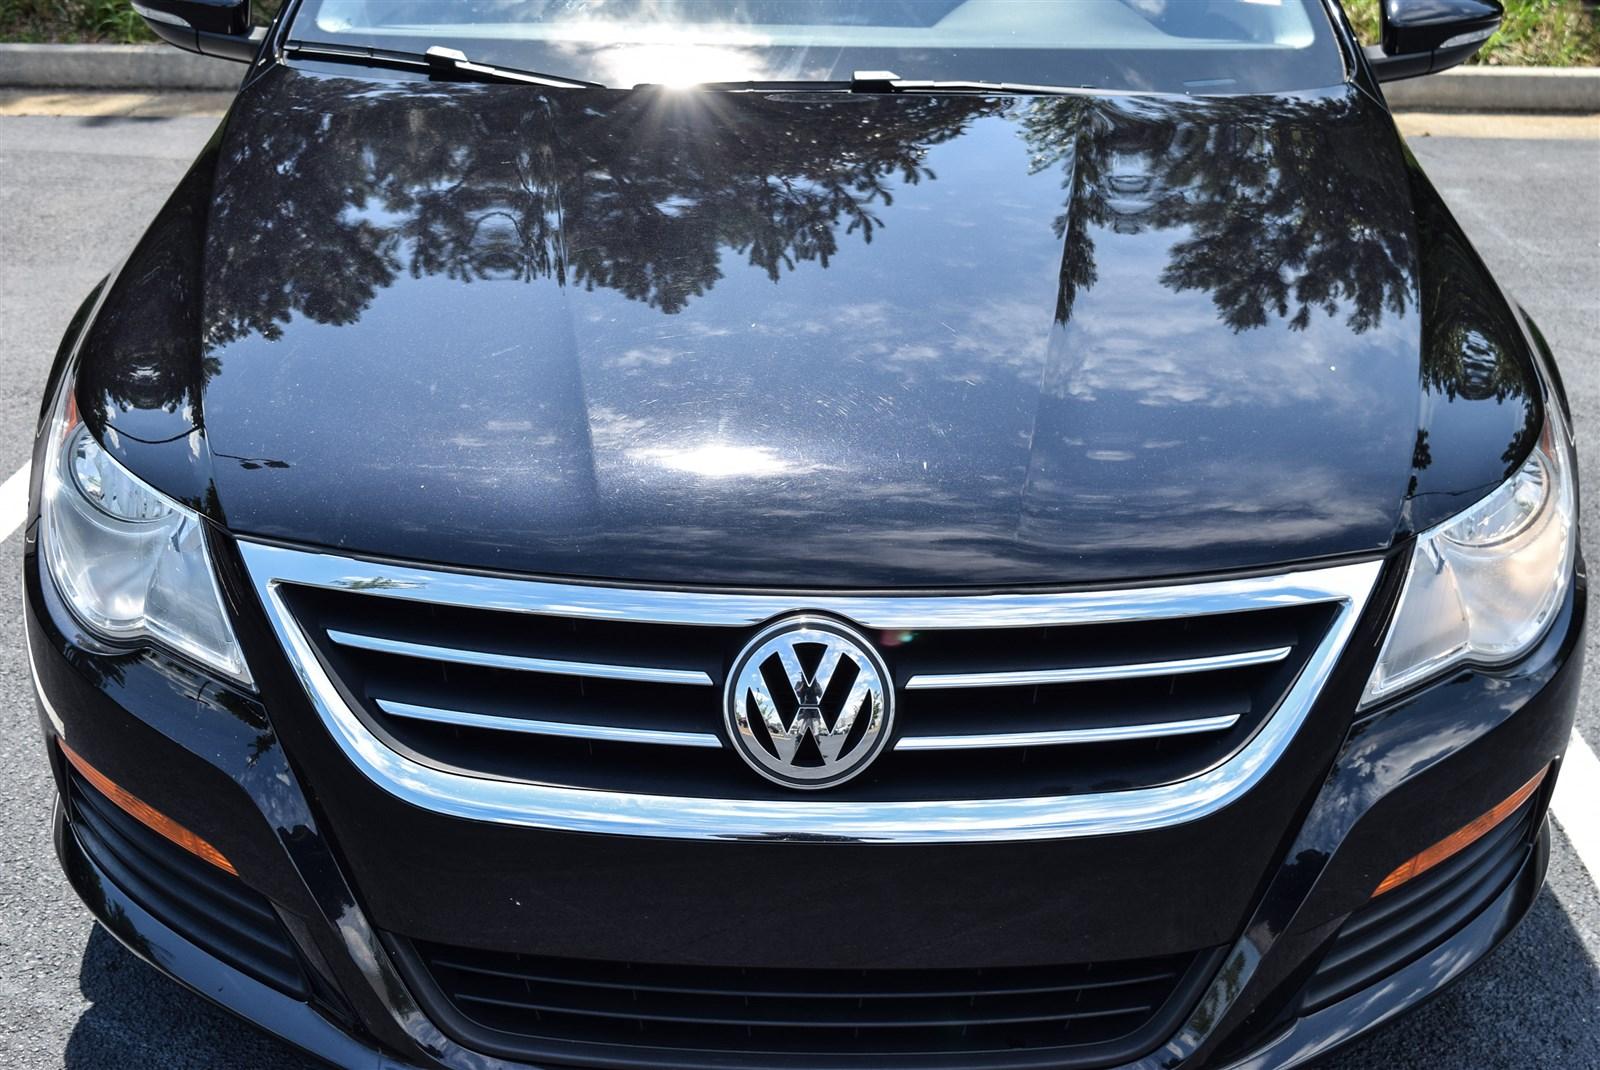 Used 2012 Volkswagen CC for sale Sold at Gravity Autos Marietta in Marietta GA 30060 7